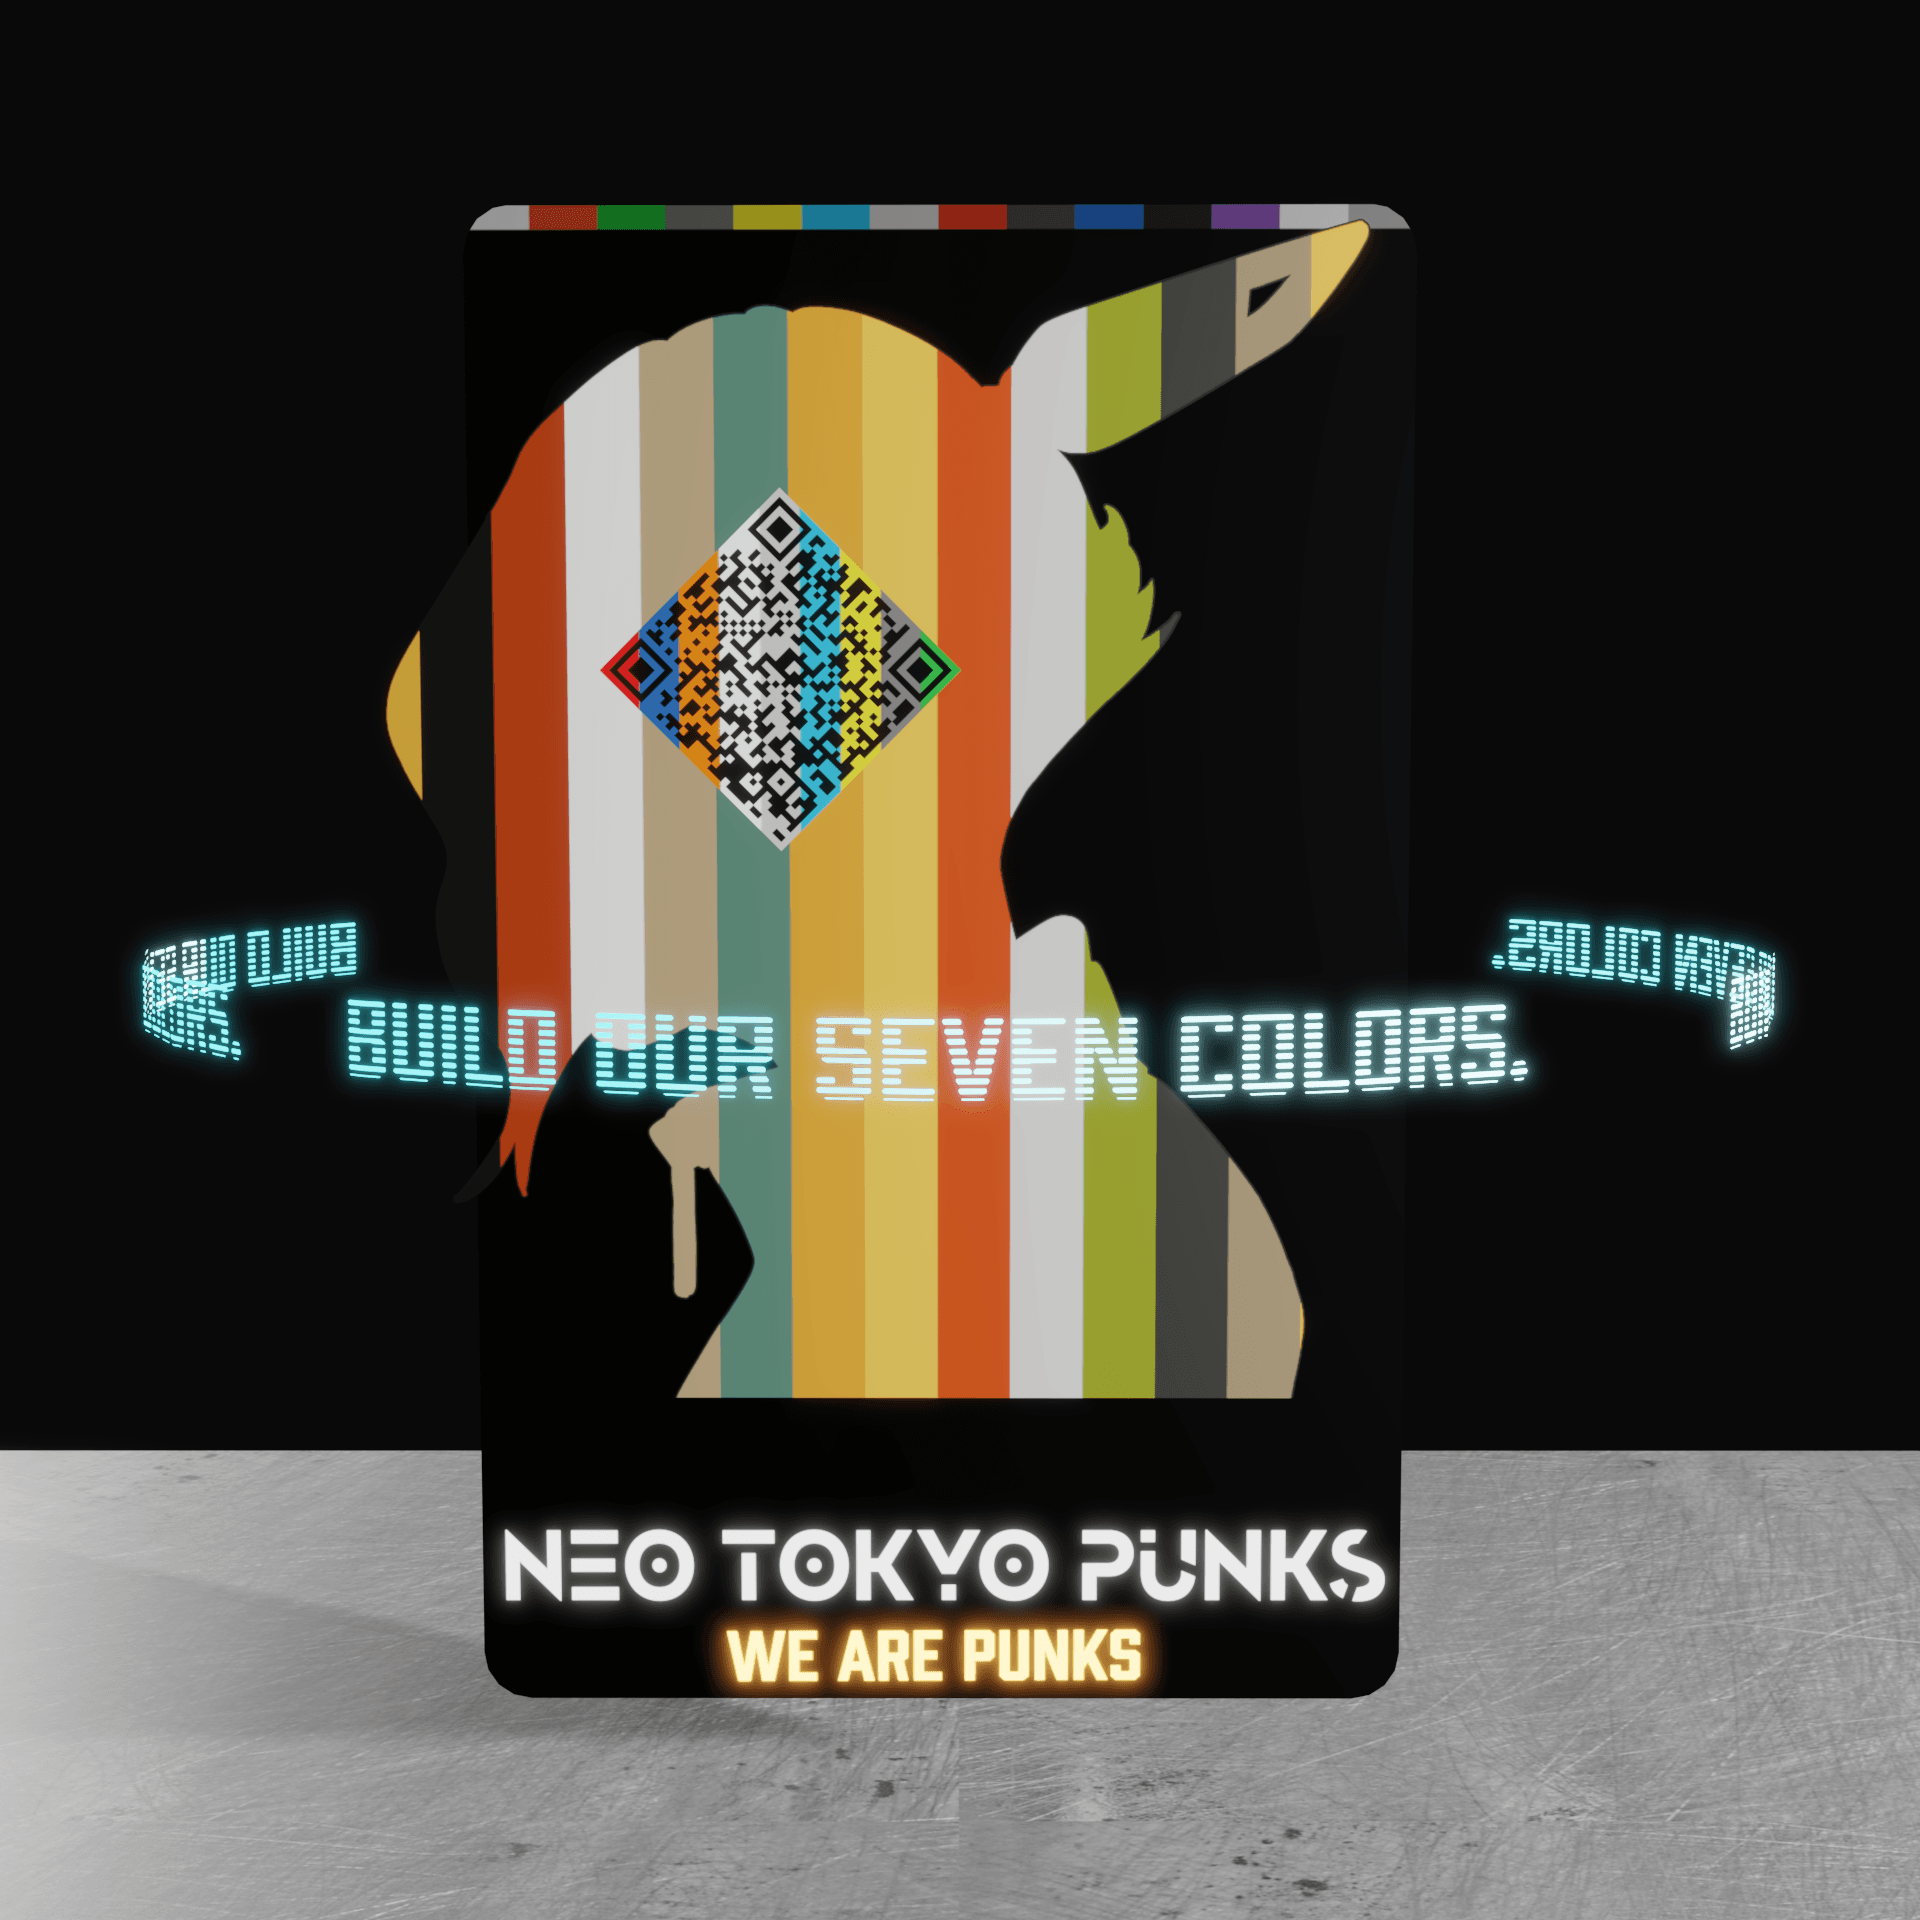 Punks[ID]Key #981